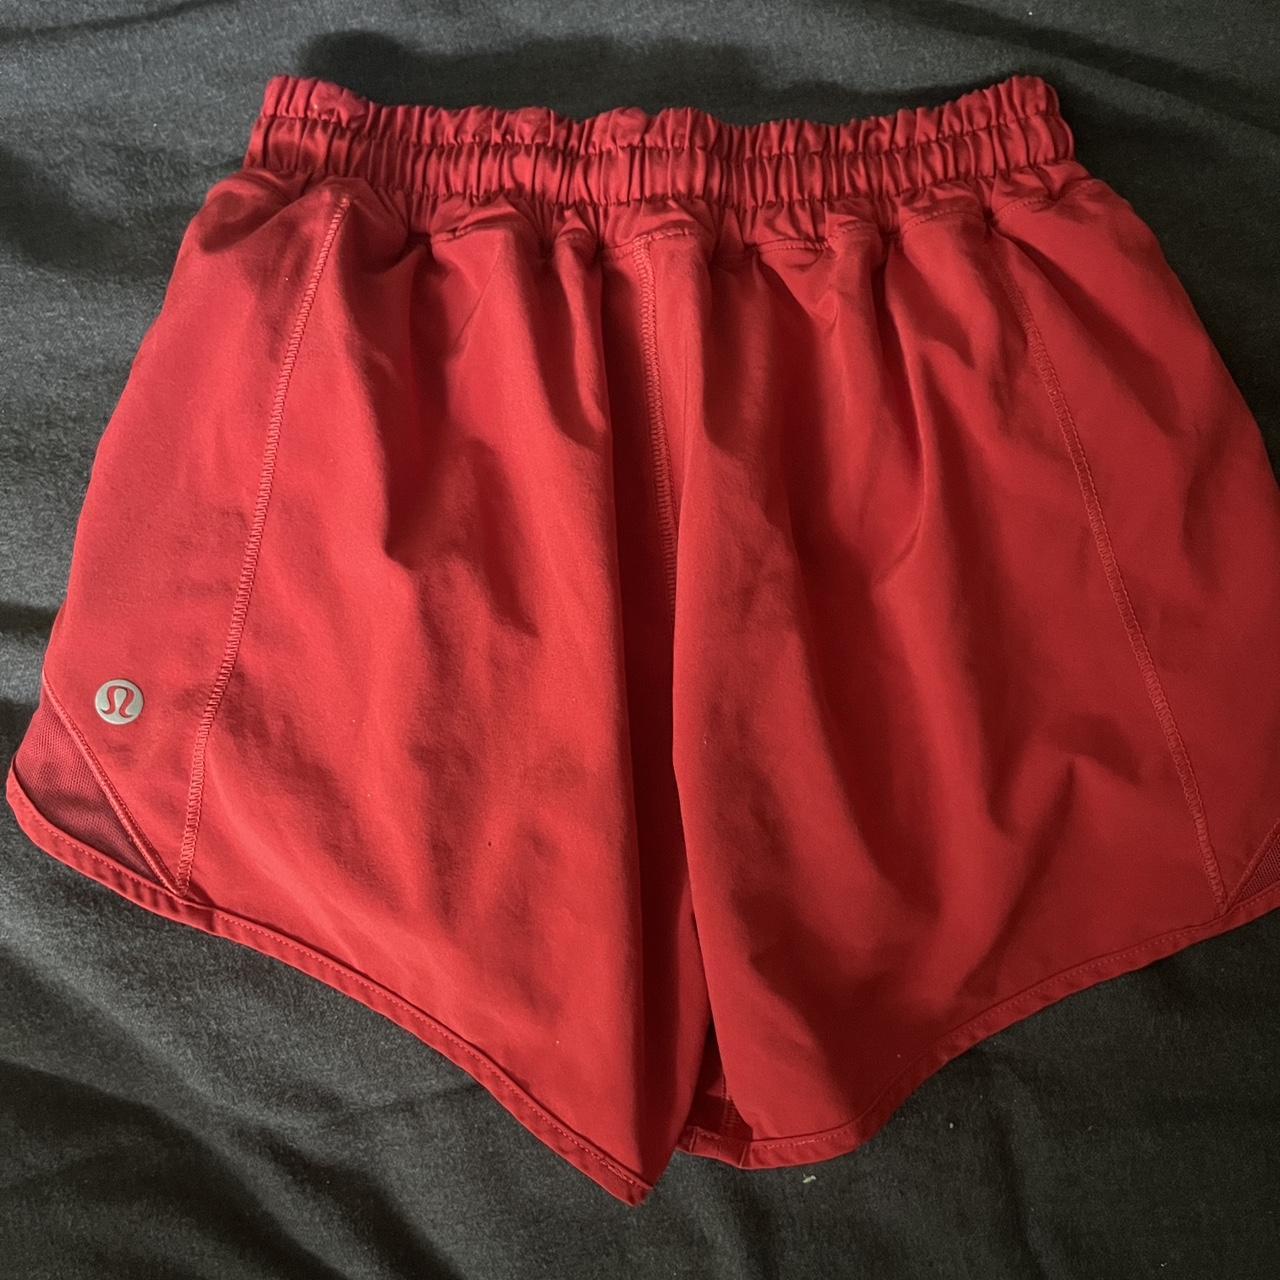 Lululemon Women's Red Shorts (2)